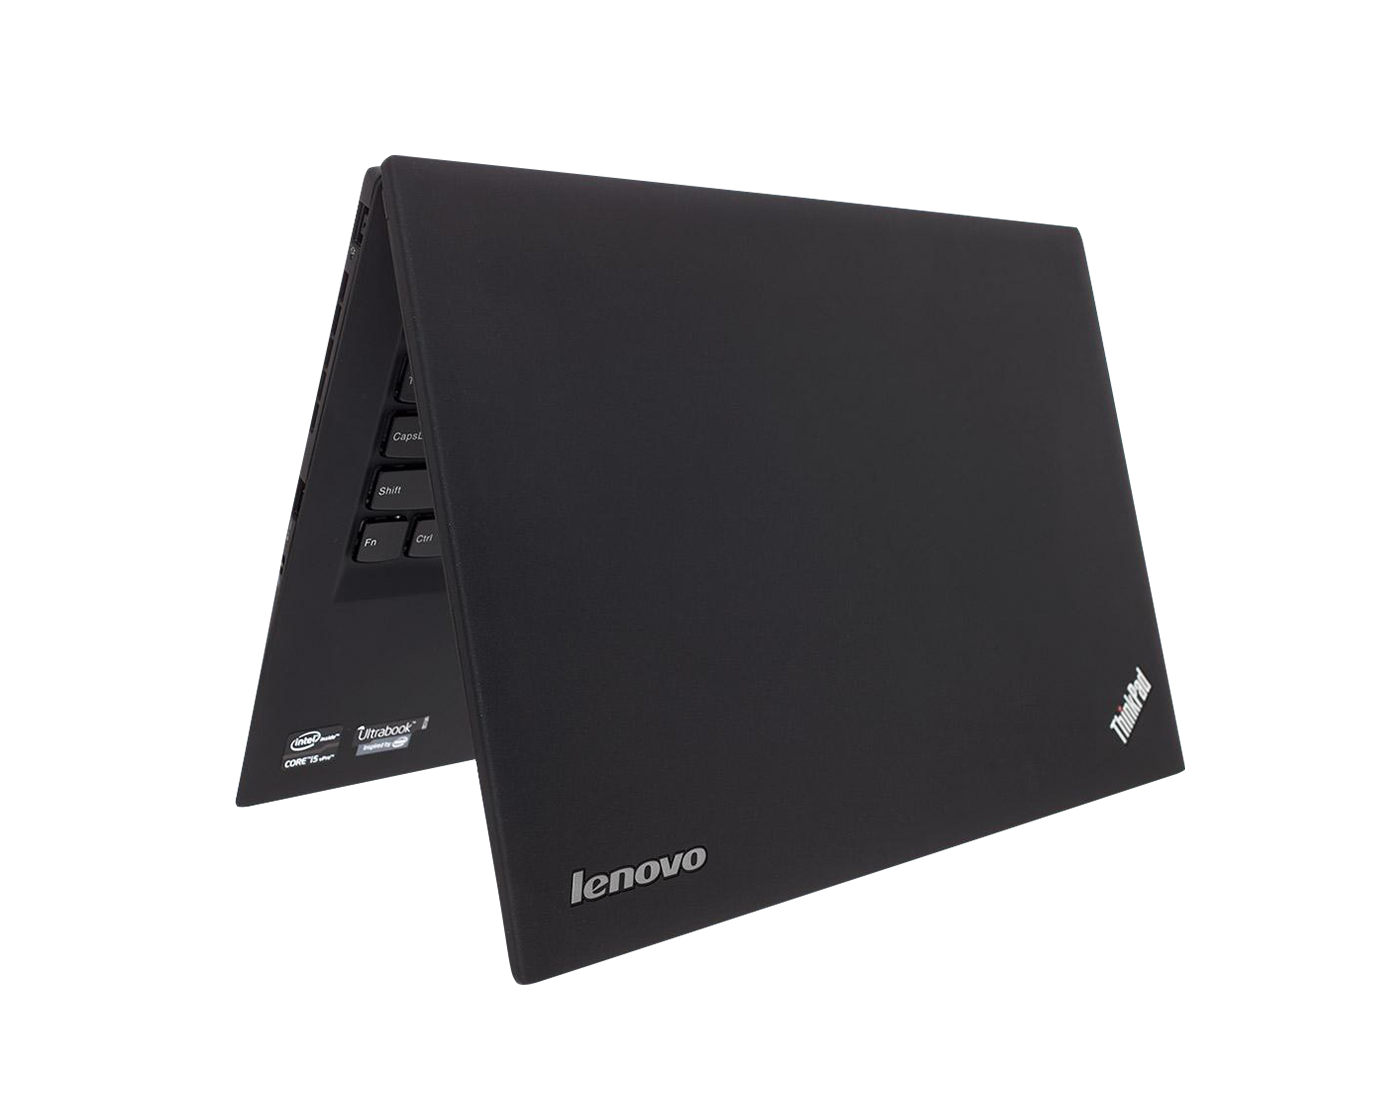 Lenovo Thinkpad X1 Carbon 6th / Core I7 8550u 1,8ghz  / 14" FullHD / Win 10 Pro / ¡Regalo ampliación a 16GB RAM y 256GB SSD! ¡Ex-demo!